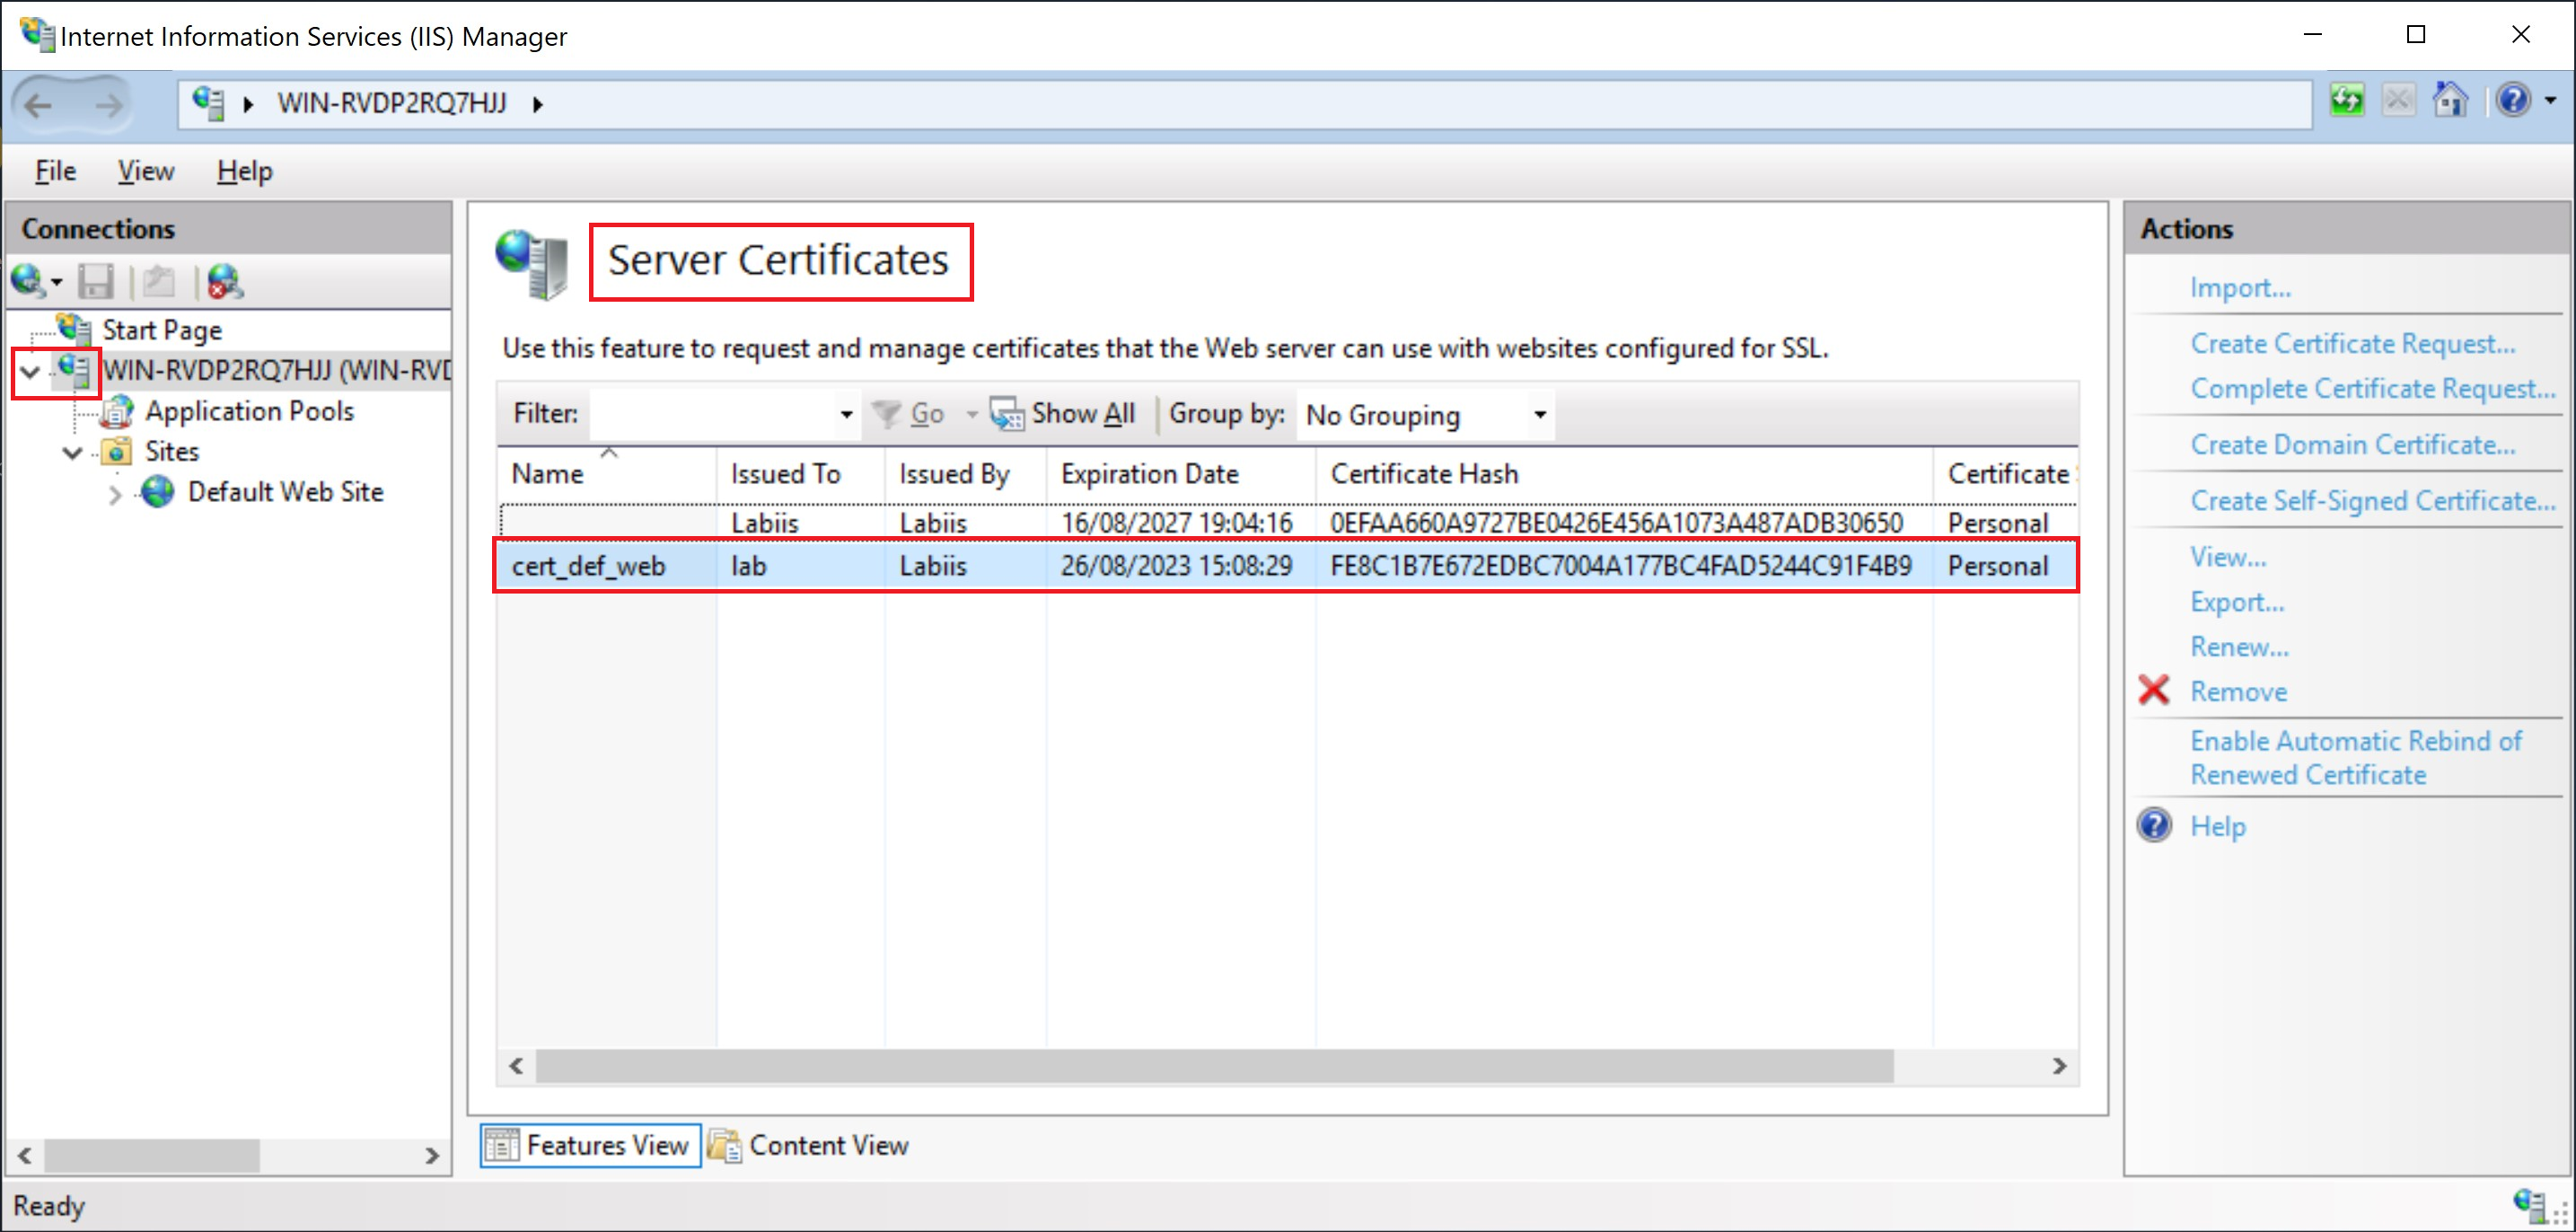 _IIS Manager_, list of SSL certificates